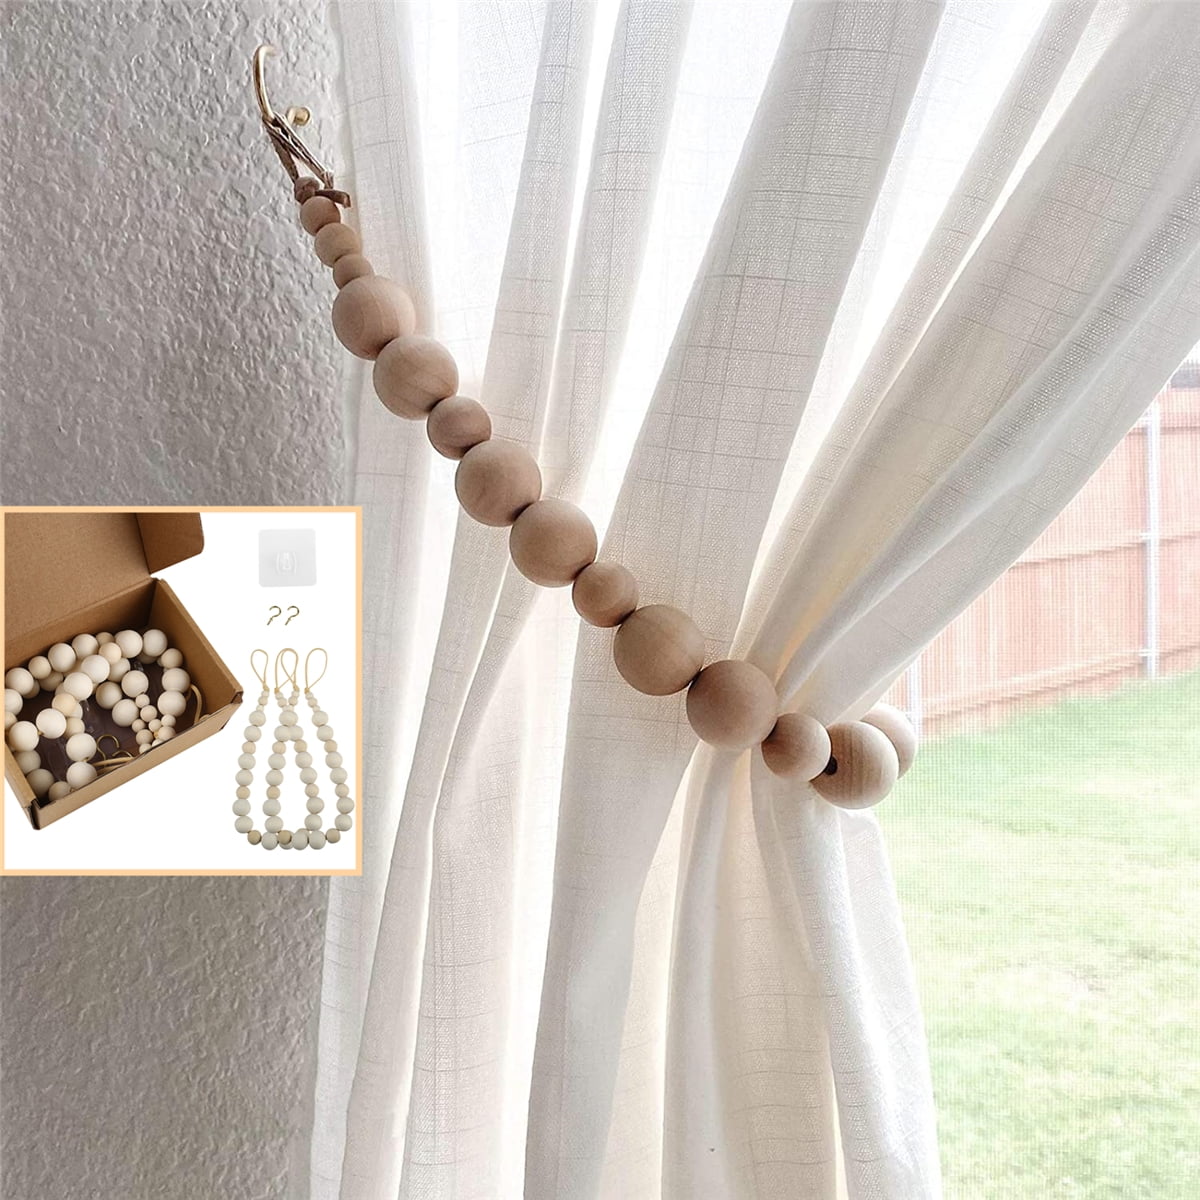 Pair Curtain Holdbacks Rope Tieback Tassel Beaded Ball Tie Backs Room Window Dec 